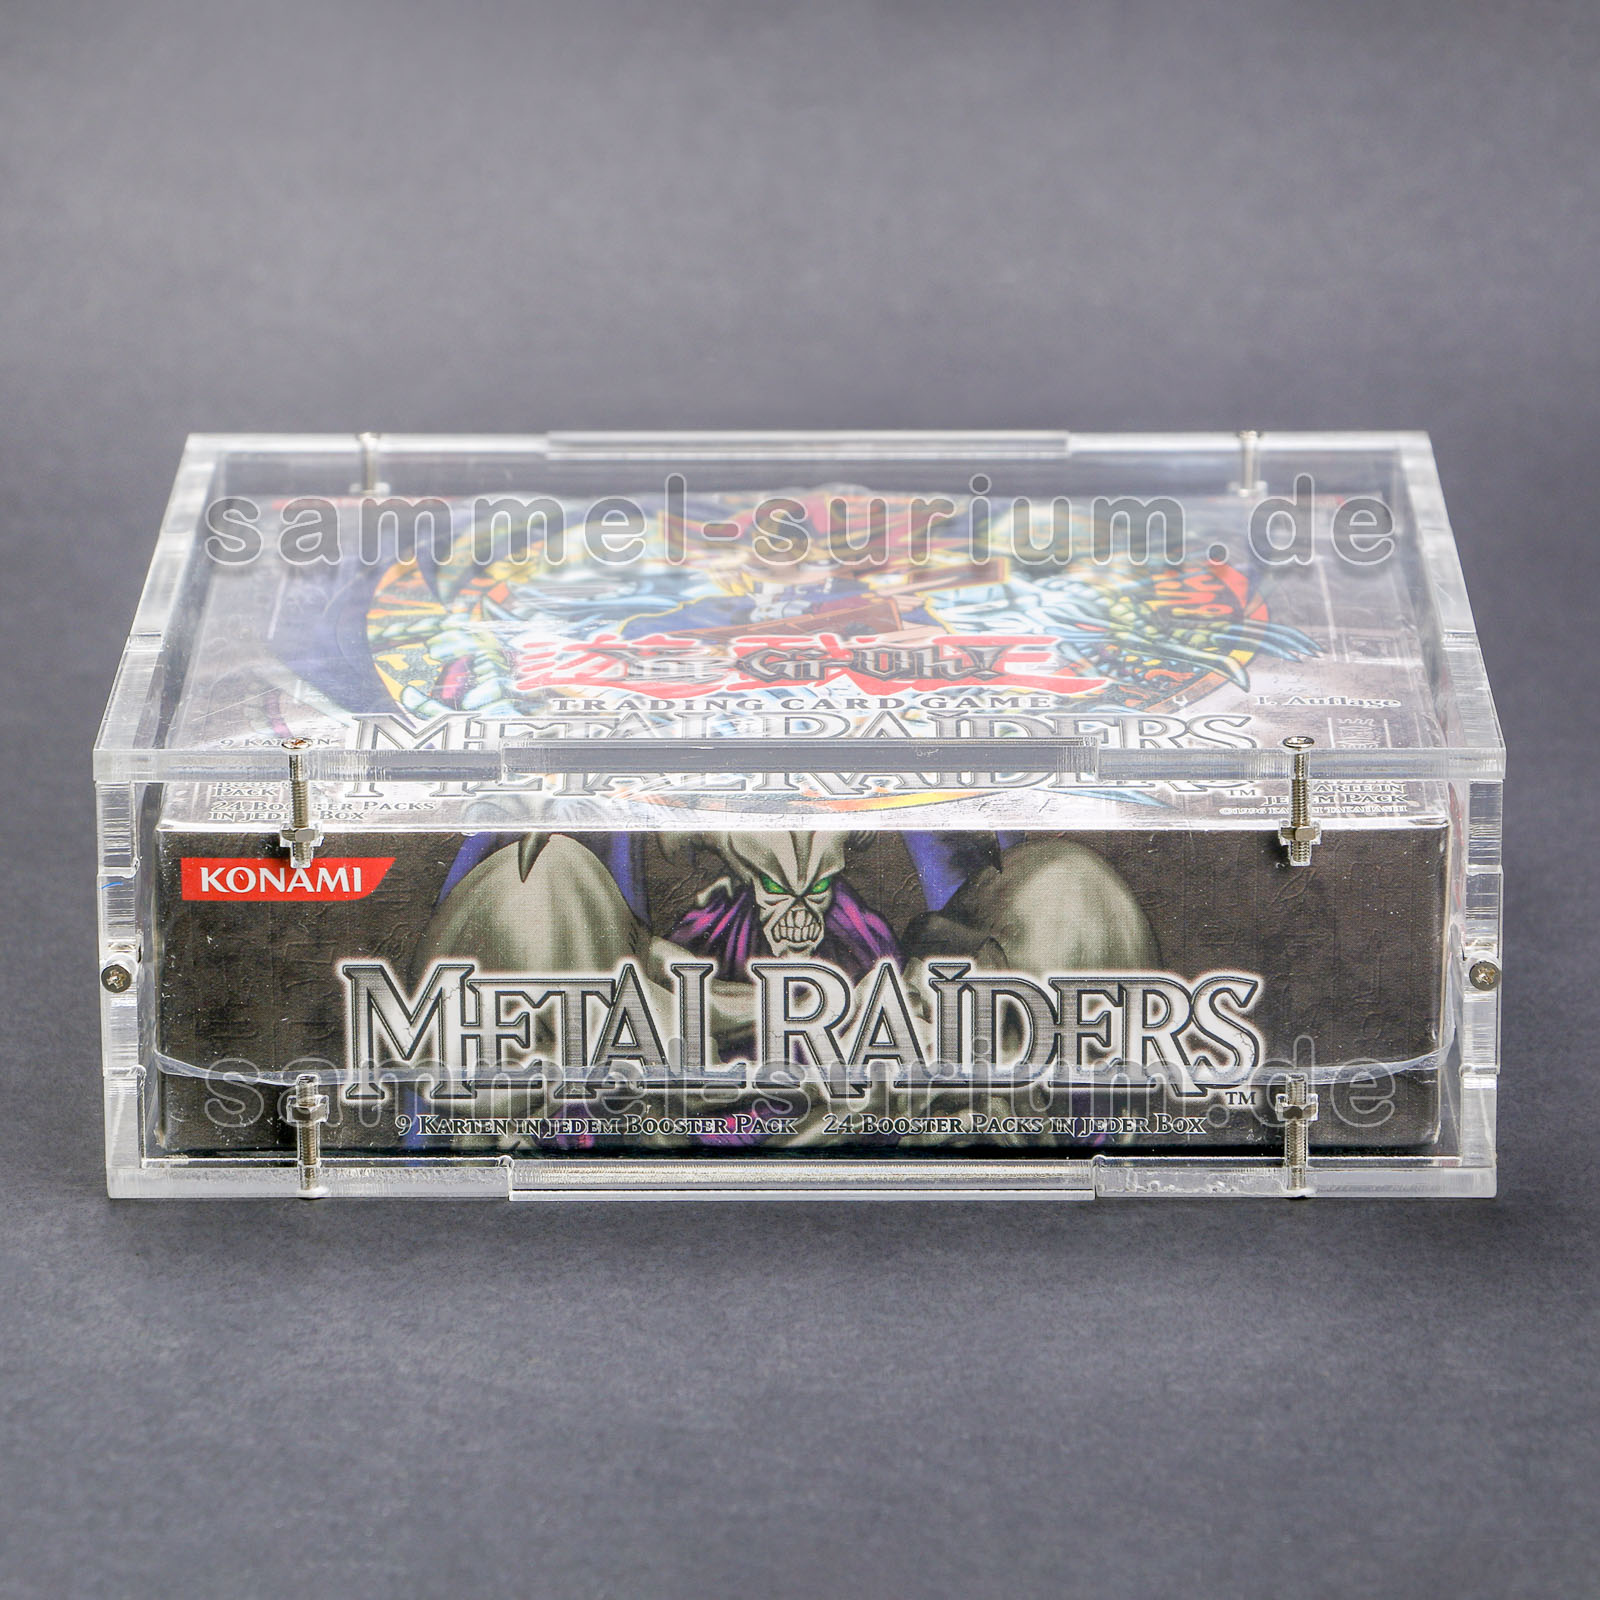 yu metal raiders display 24 DE 1.edition 04